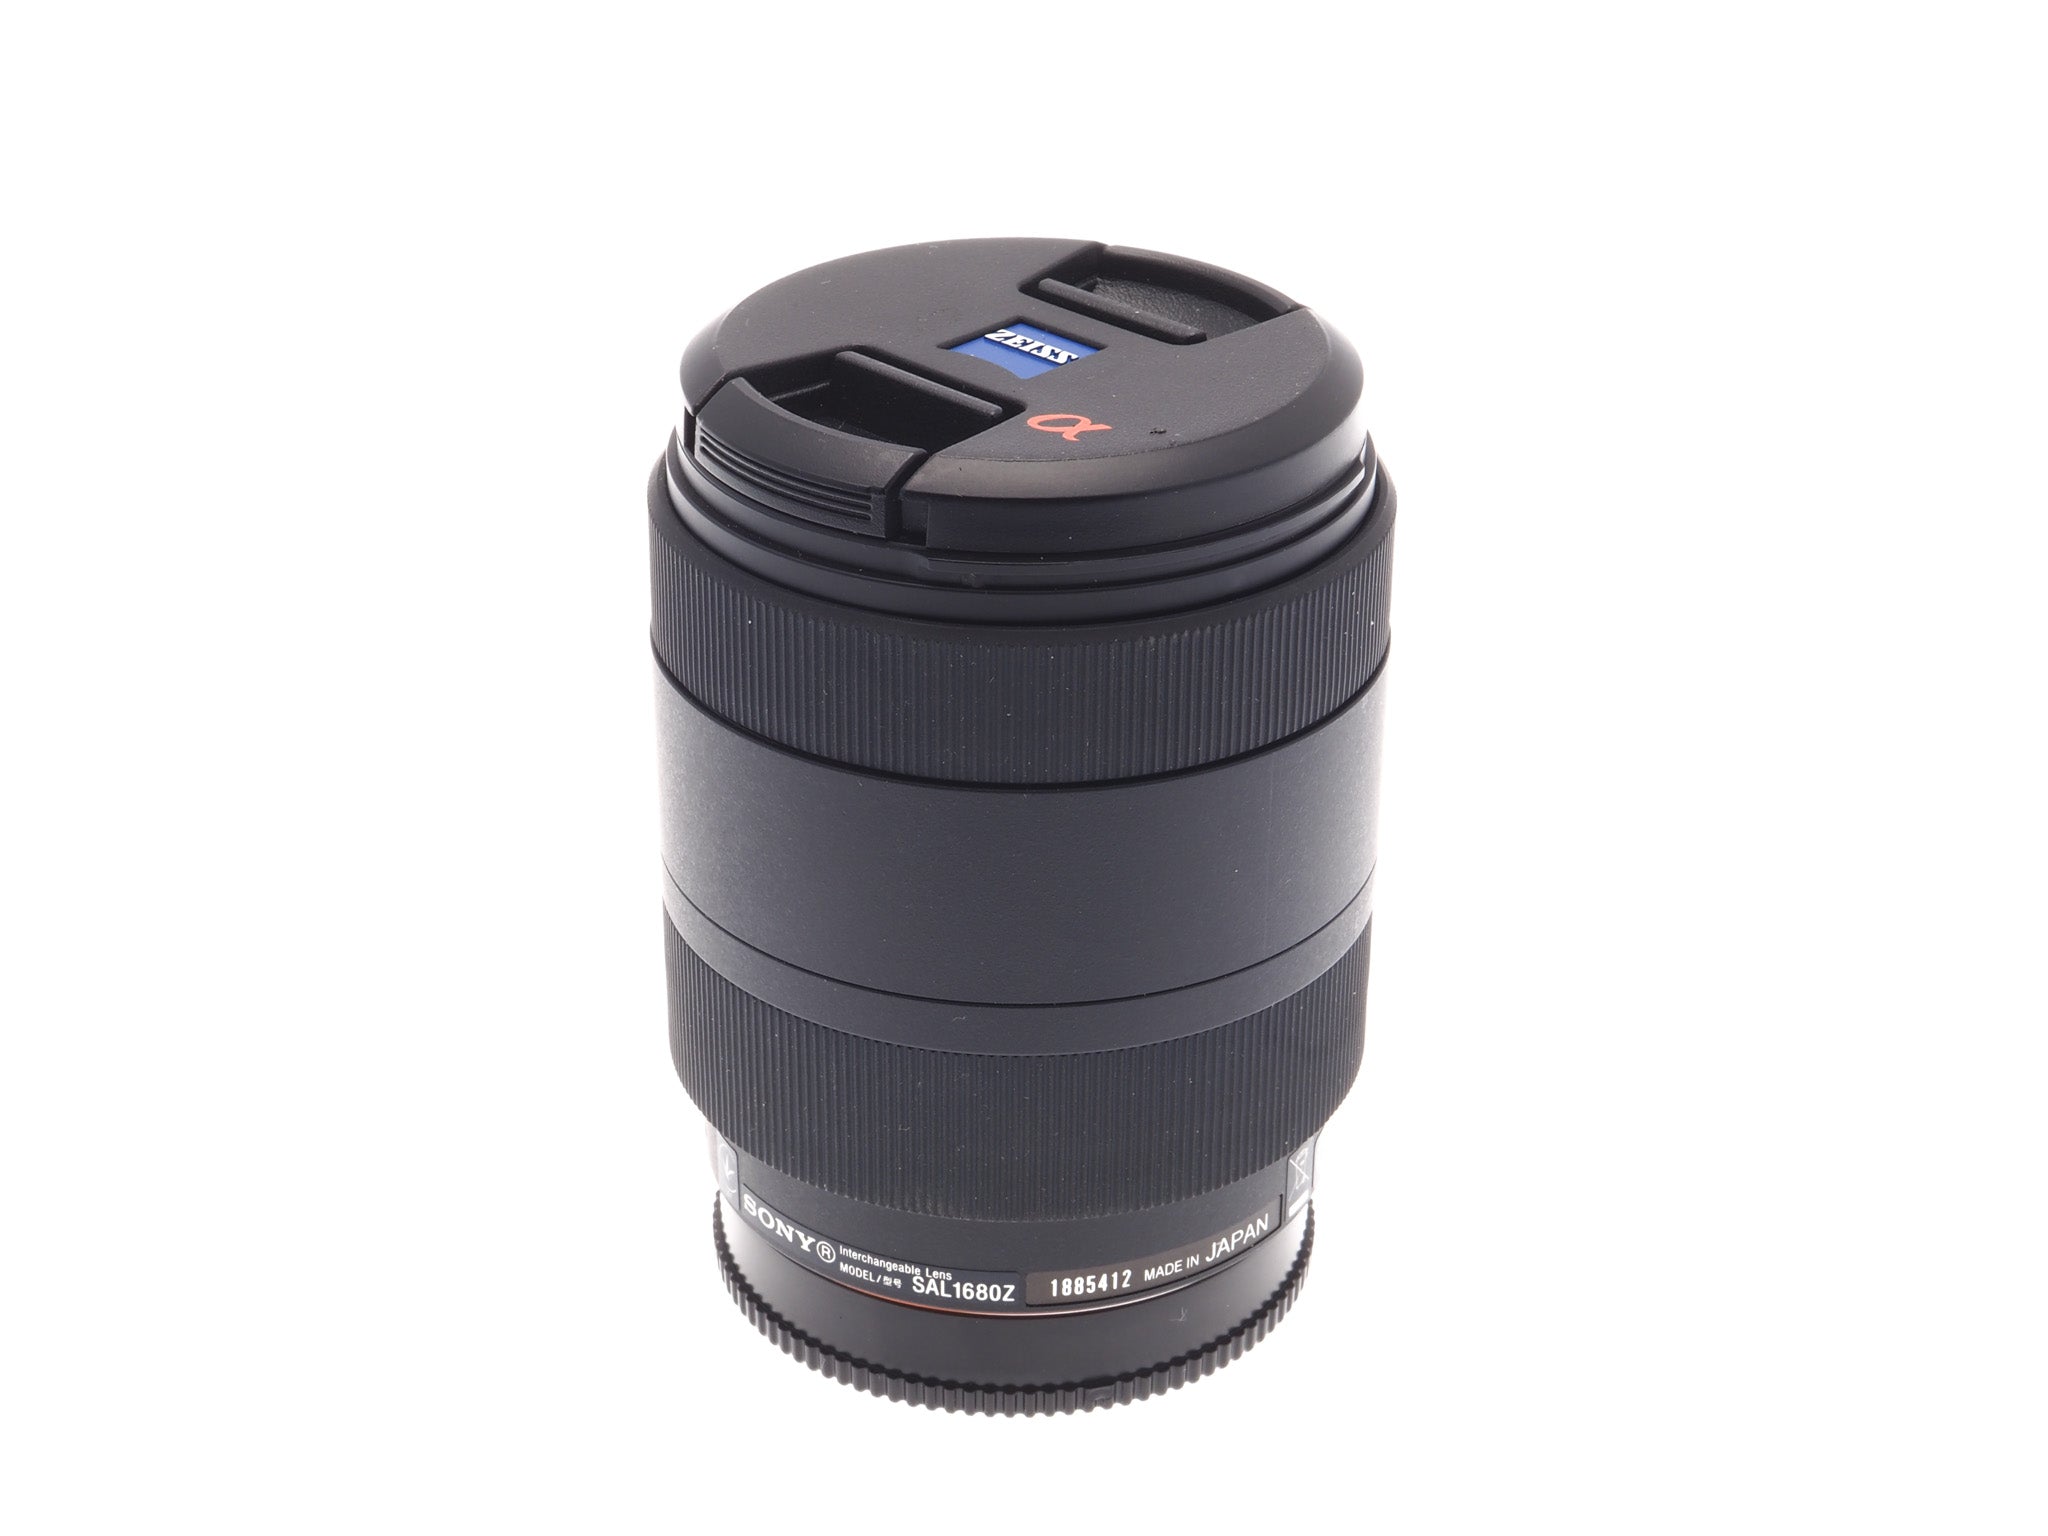 Sony 16-80mm f3.5-4.5 DT ZA Vario-Sonnar T* – Kamerastore